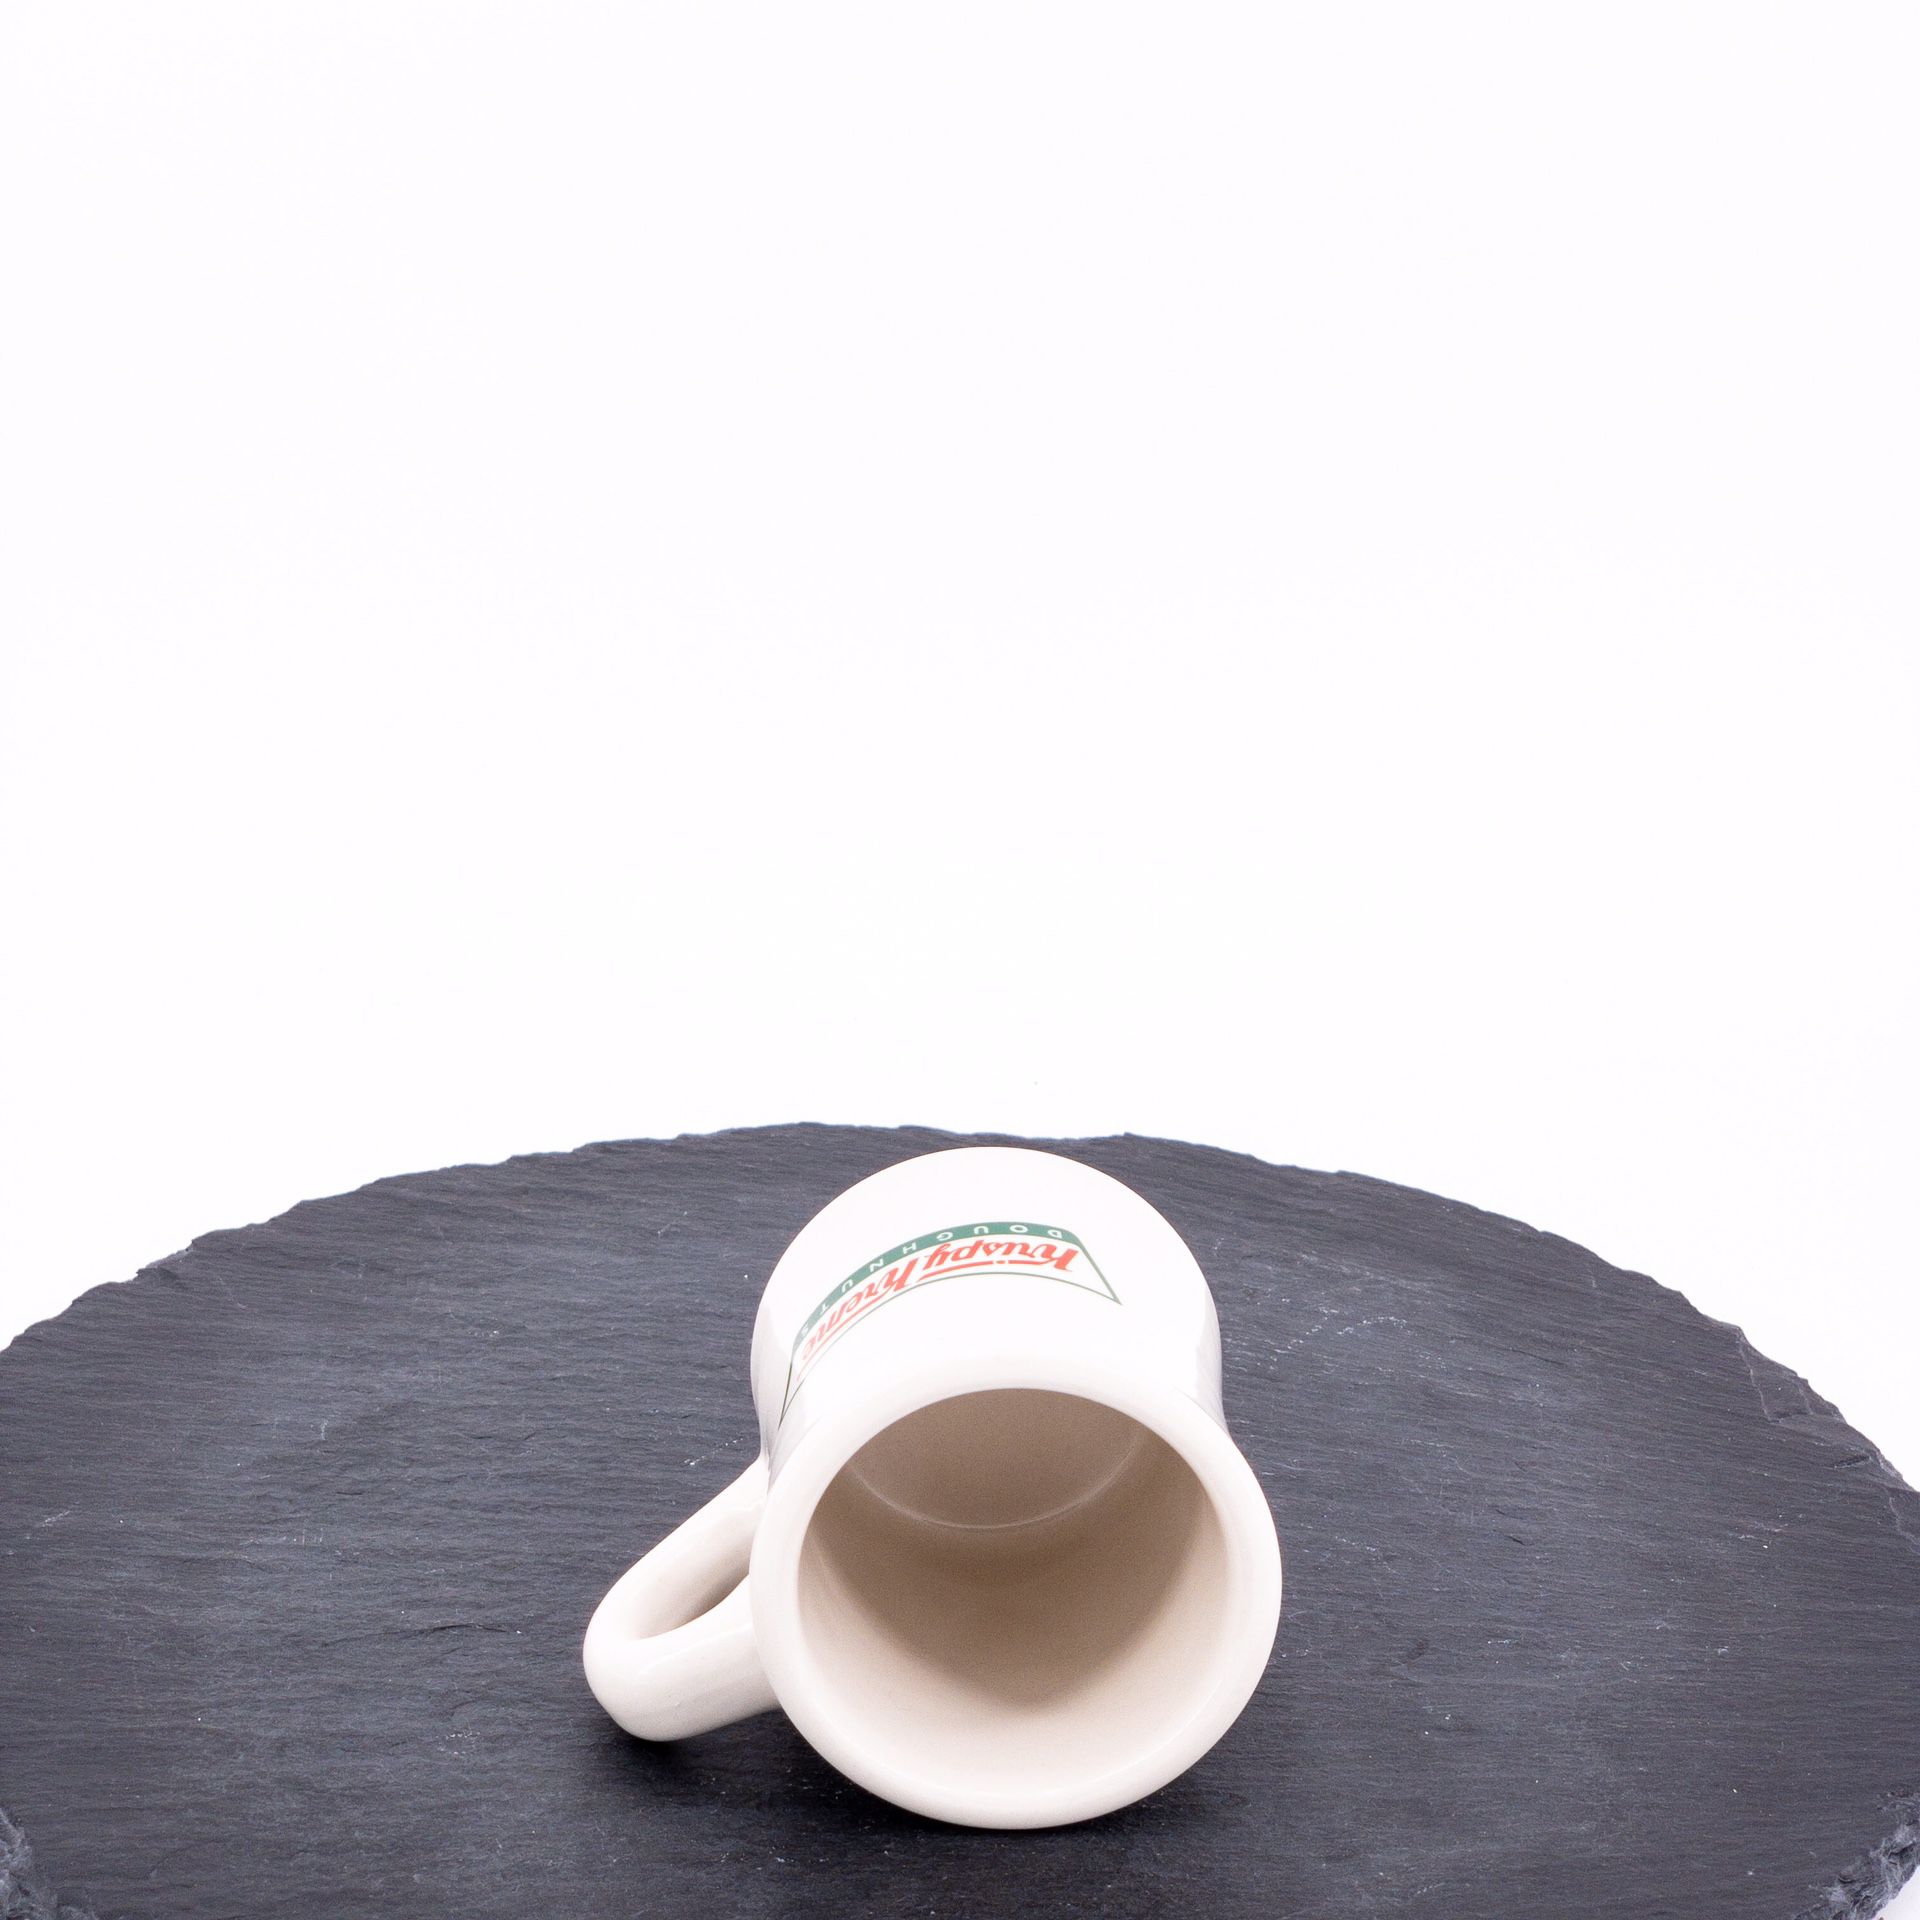 Krispy Kreme Doughnuts Coffee Mug